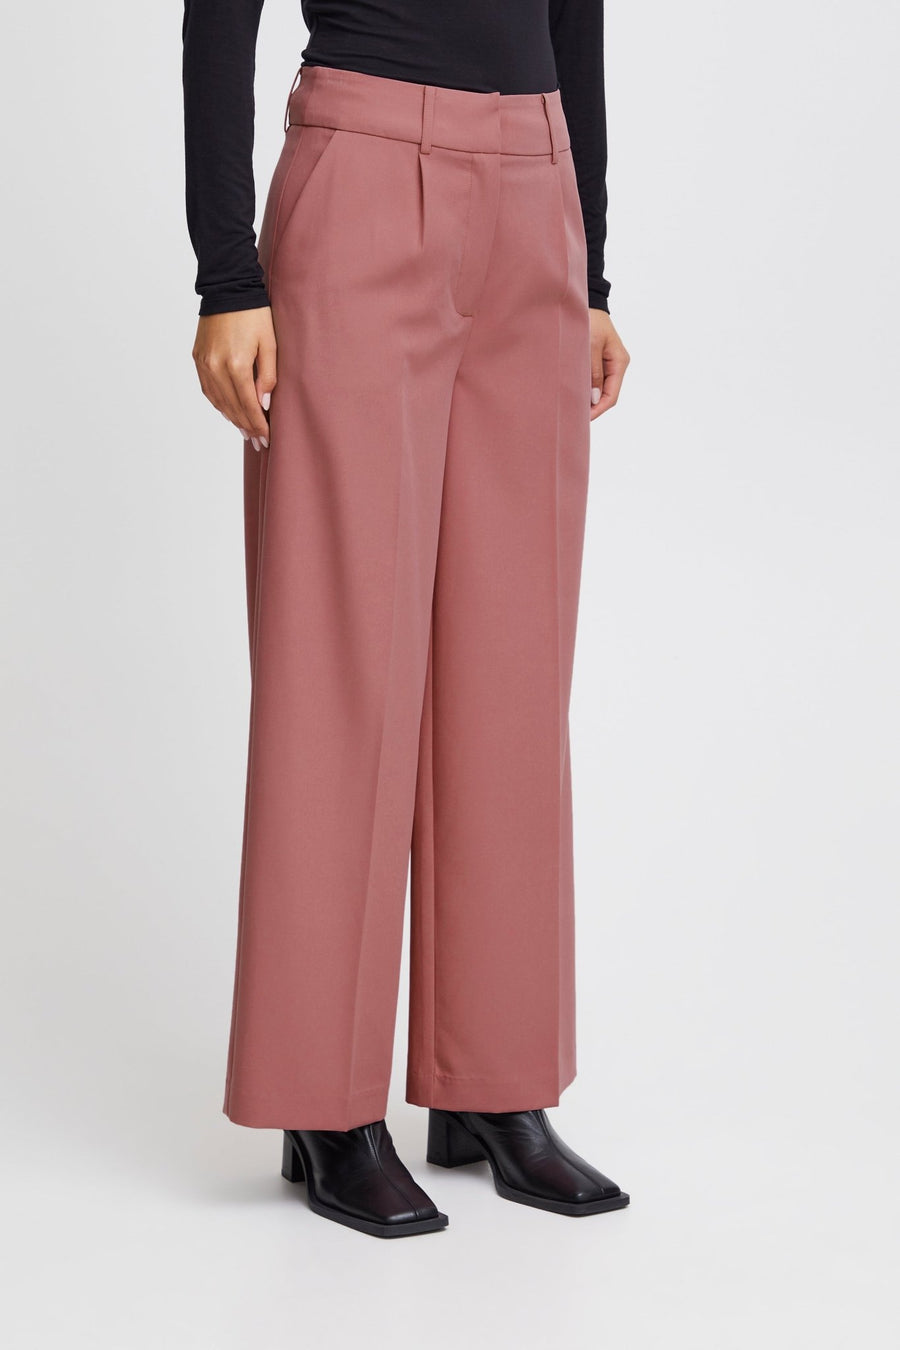 Lexi wide leg trousers - heather rose - Blue Sky Fashions & Lingerie